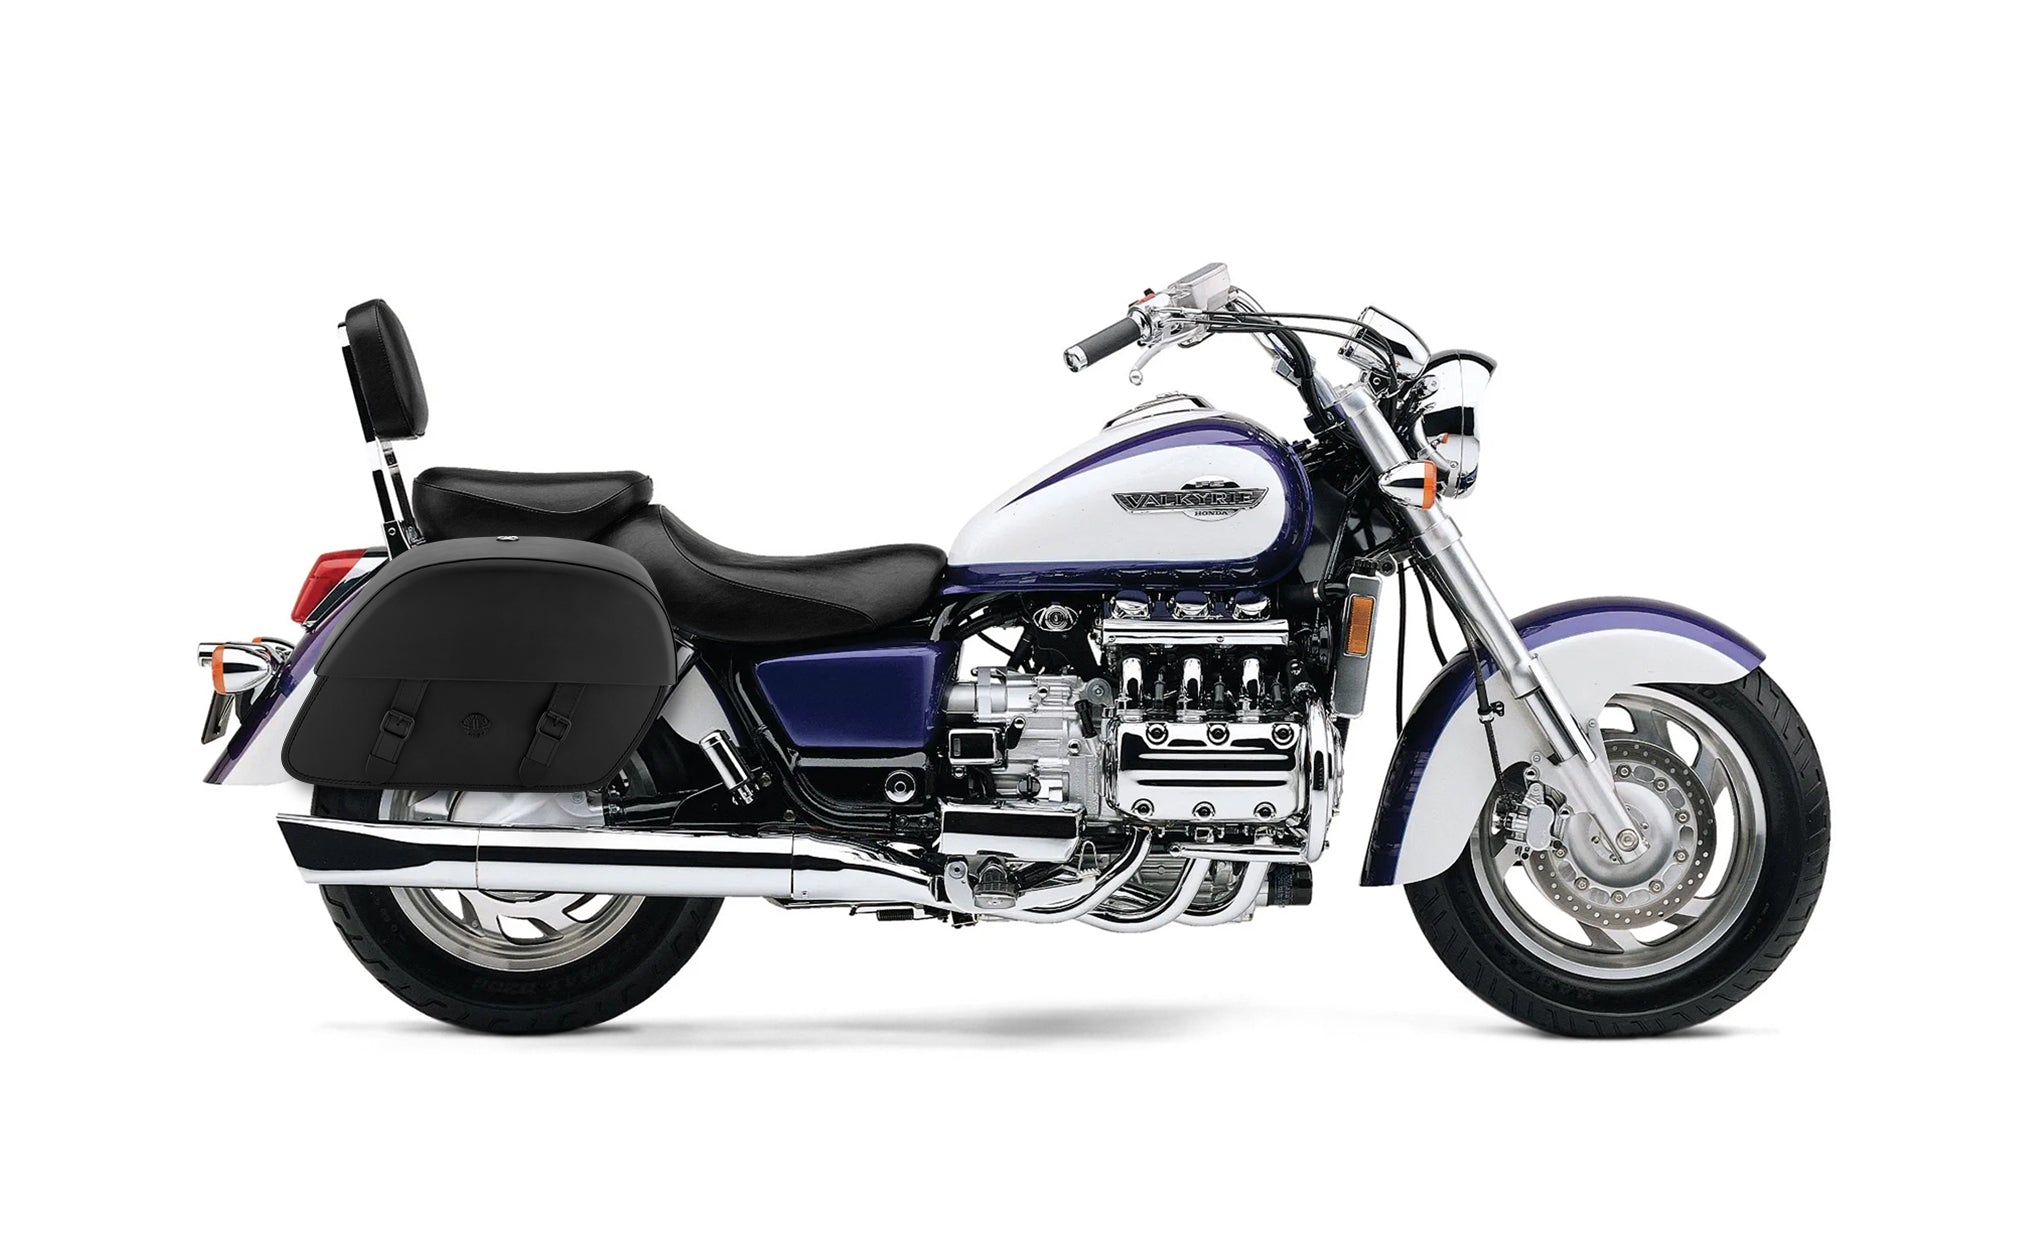 Viking Baelor Large Honda Valkyrie 1500 Interstate Leather Motorcycle Saddlebags on Bike Photo @expand